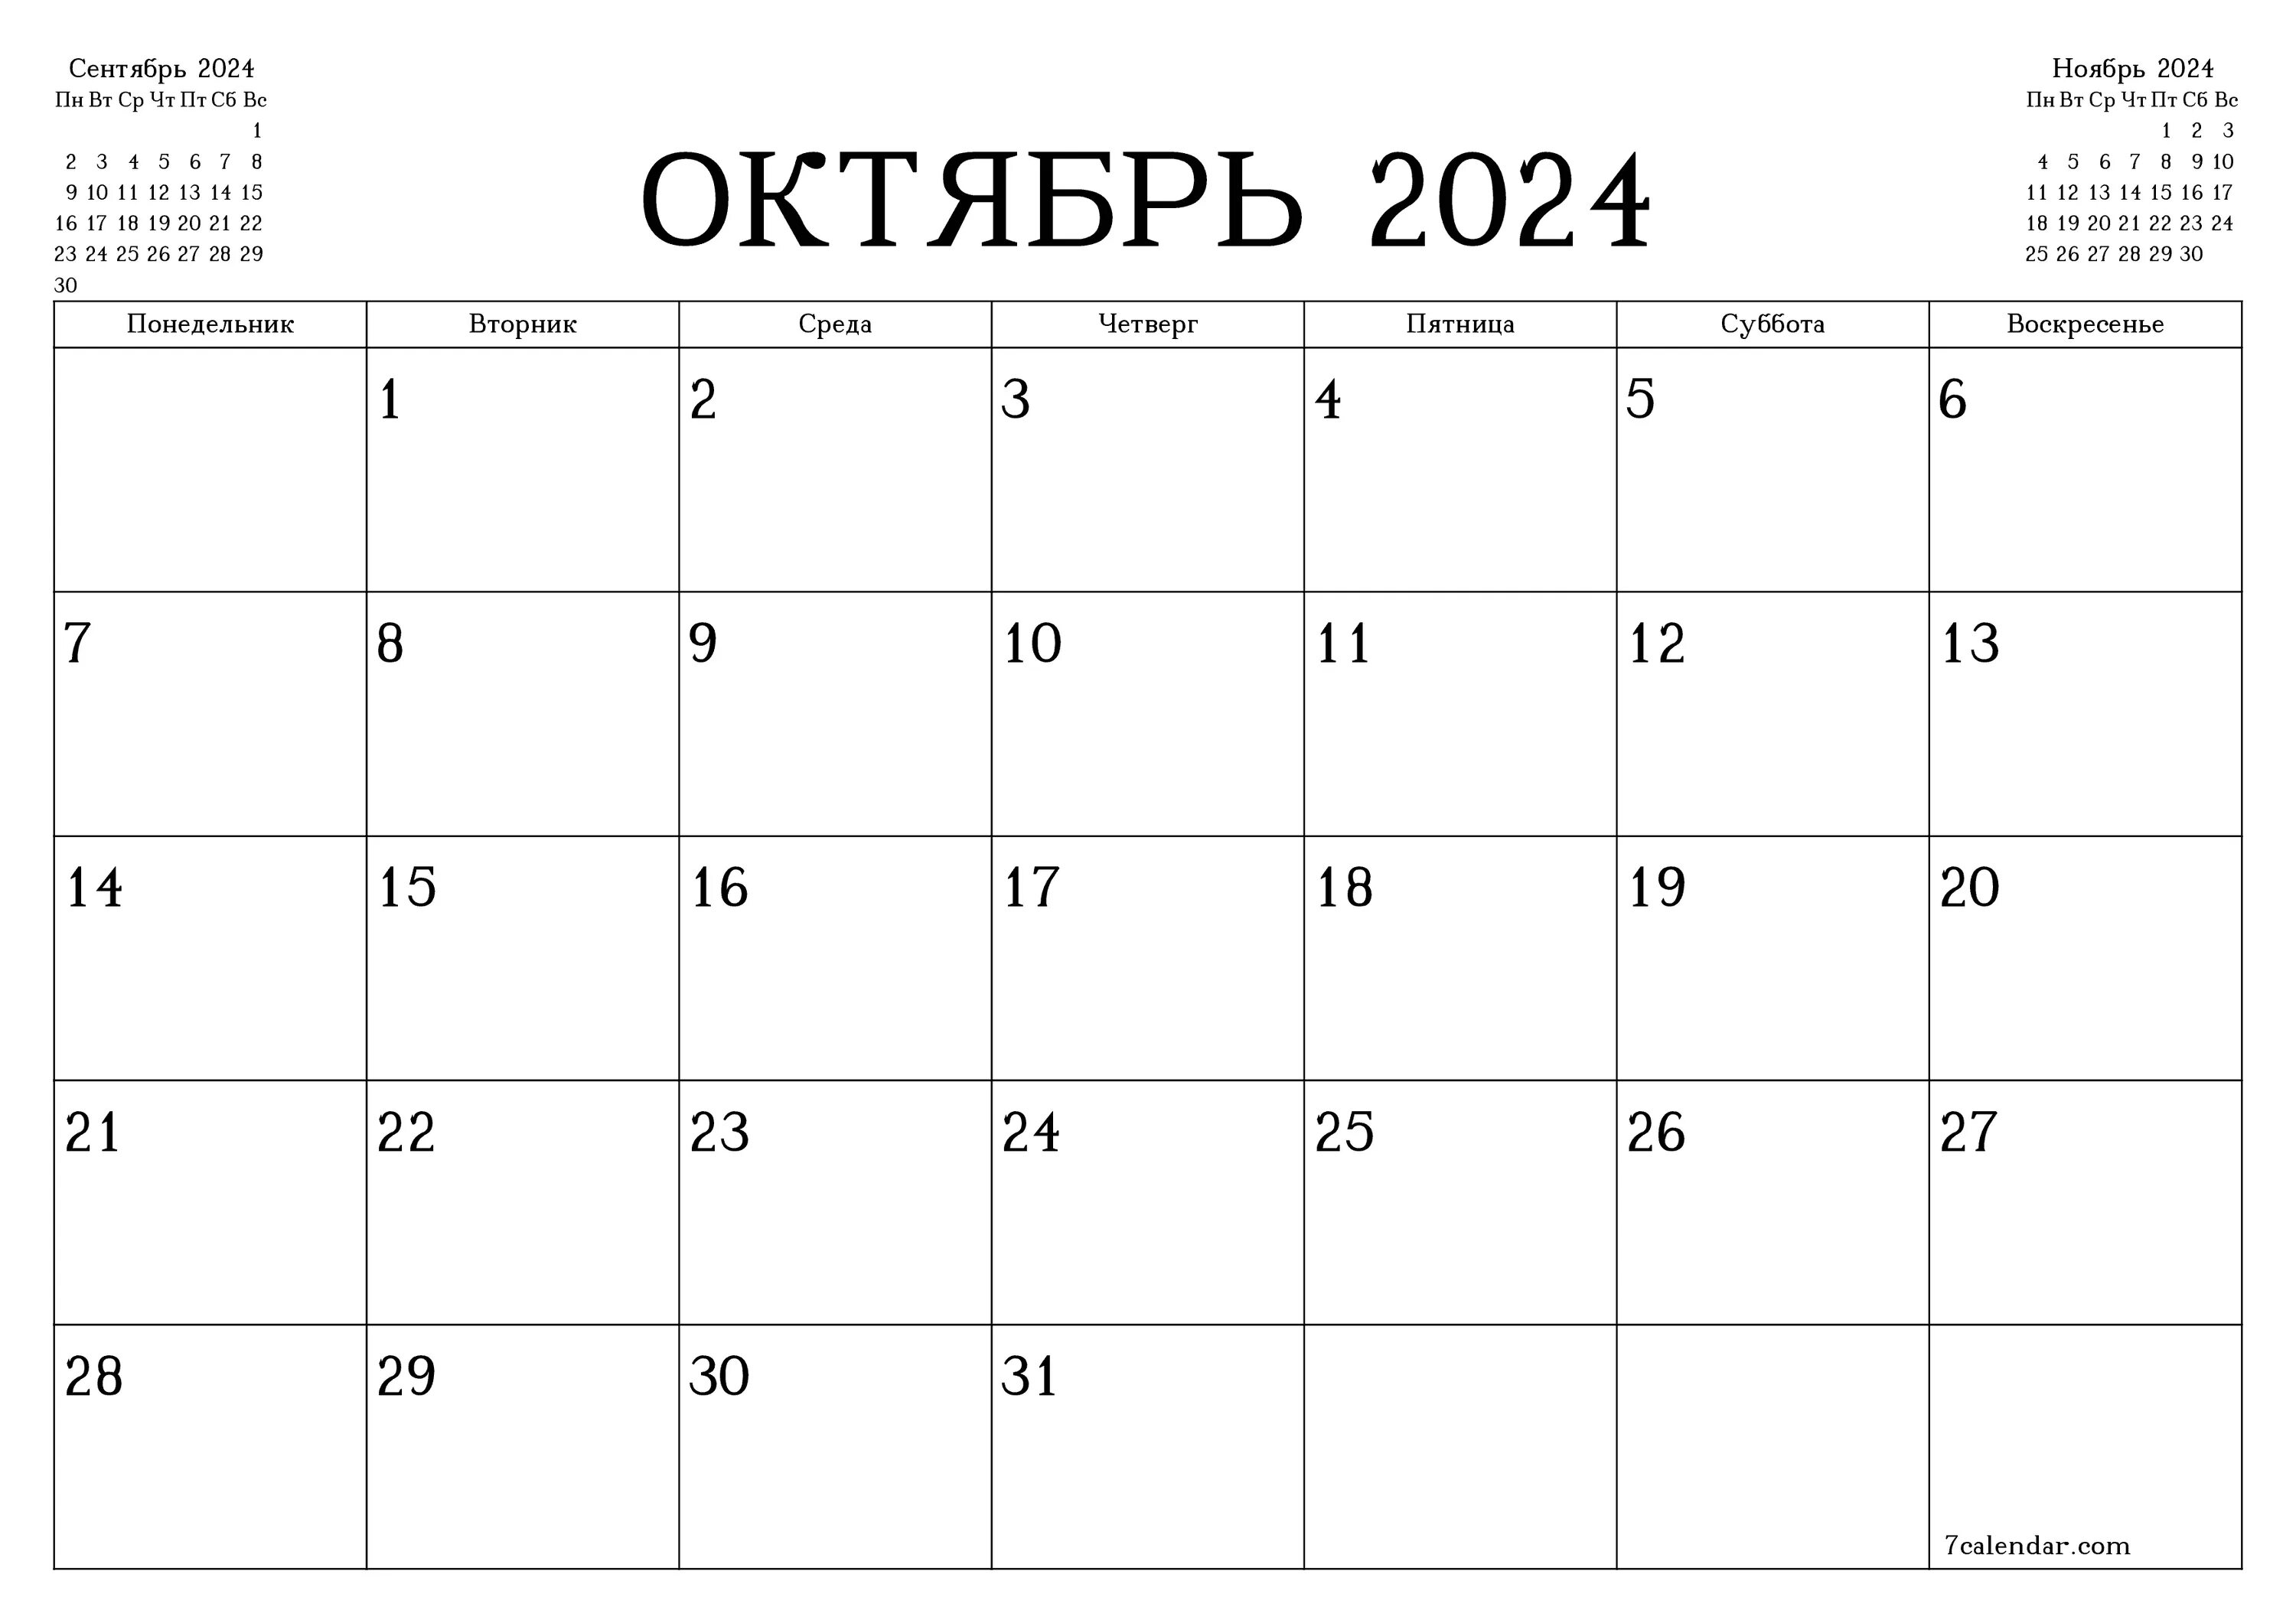 19 октября 2024 год. Календарь на октябрь 2020г. Октябрь 2020 года. Календарь октябрь 2020 для печати. Календарь август сентябрь октябрь 2020.